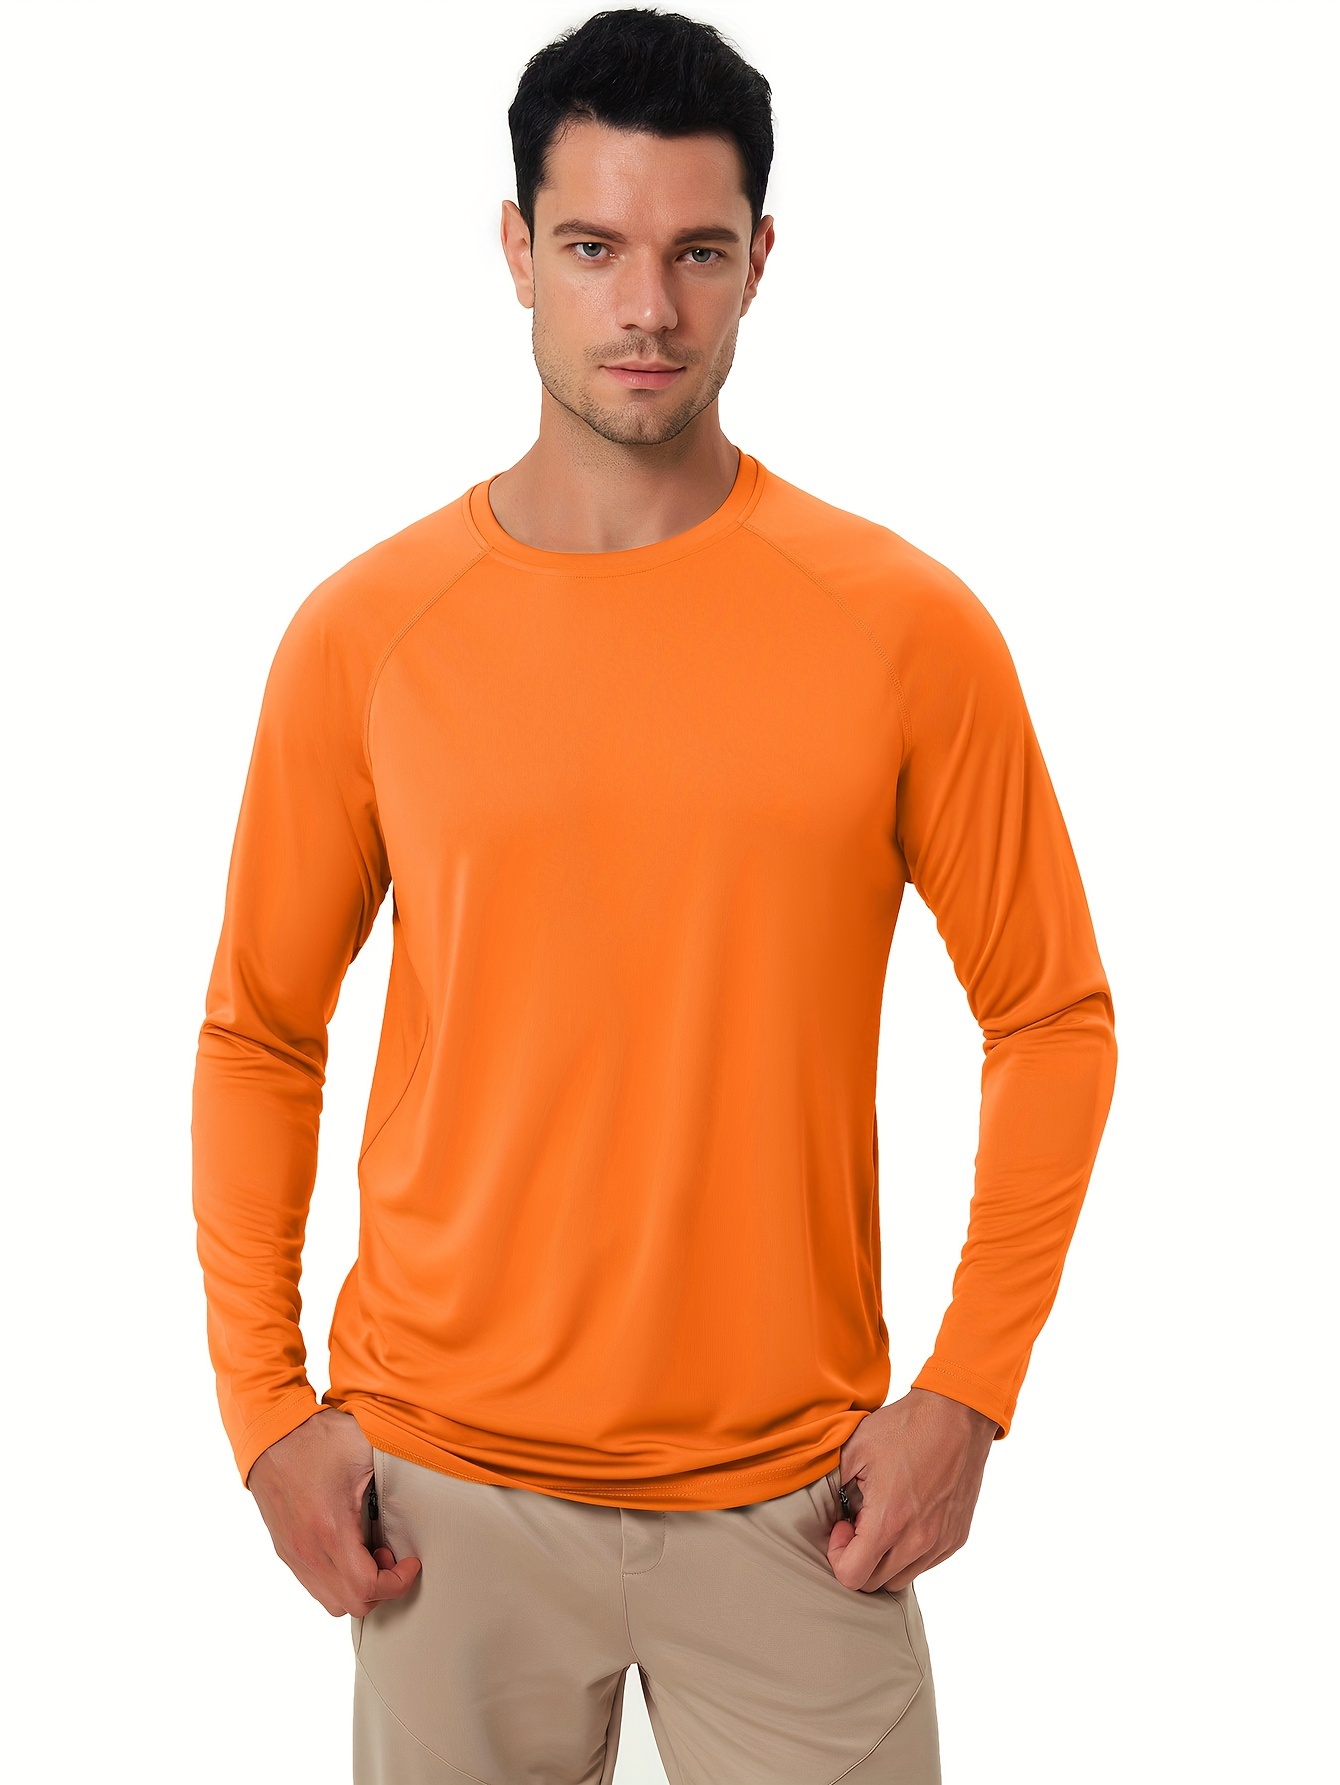 Gerry Mens Sun Shirt Protection Tee UPF 40+ - Quick-Dry, Anti-Pill Rash Guard for Men - Soft Stretch Solar Jersey Swim Shirt